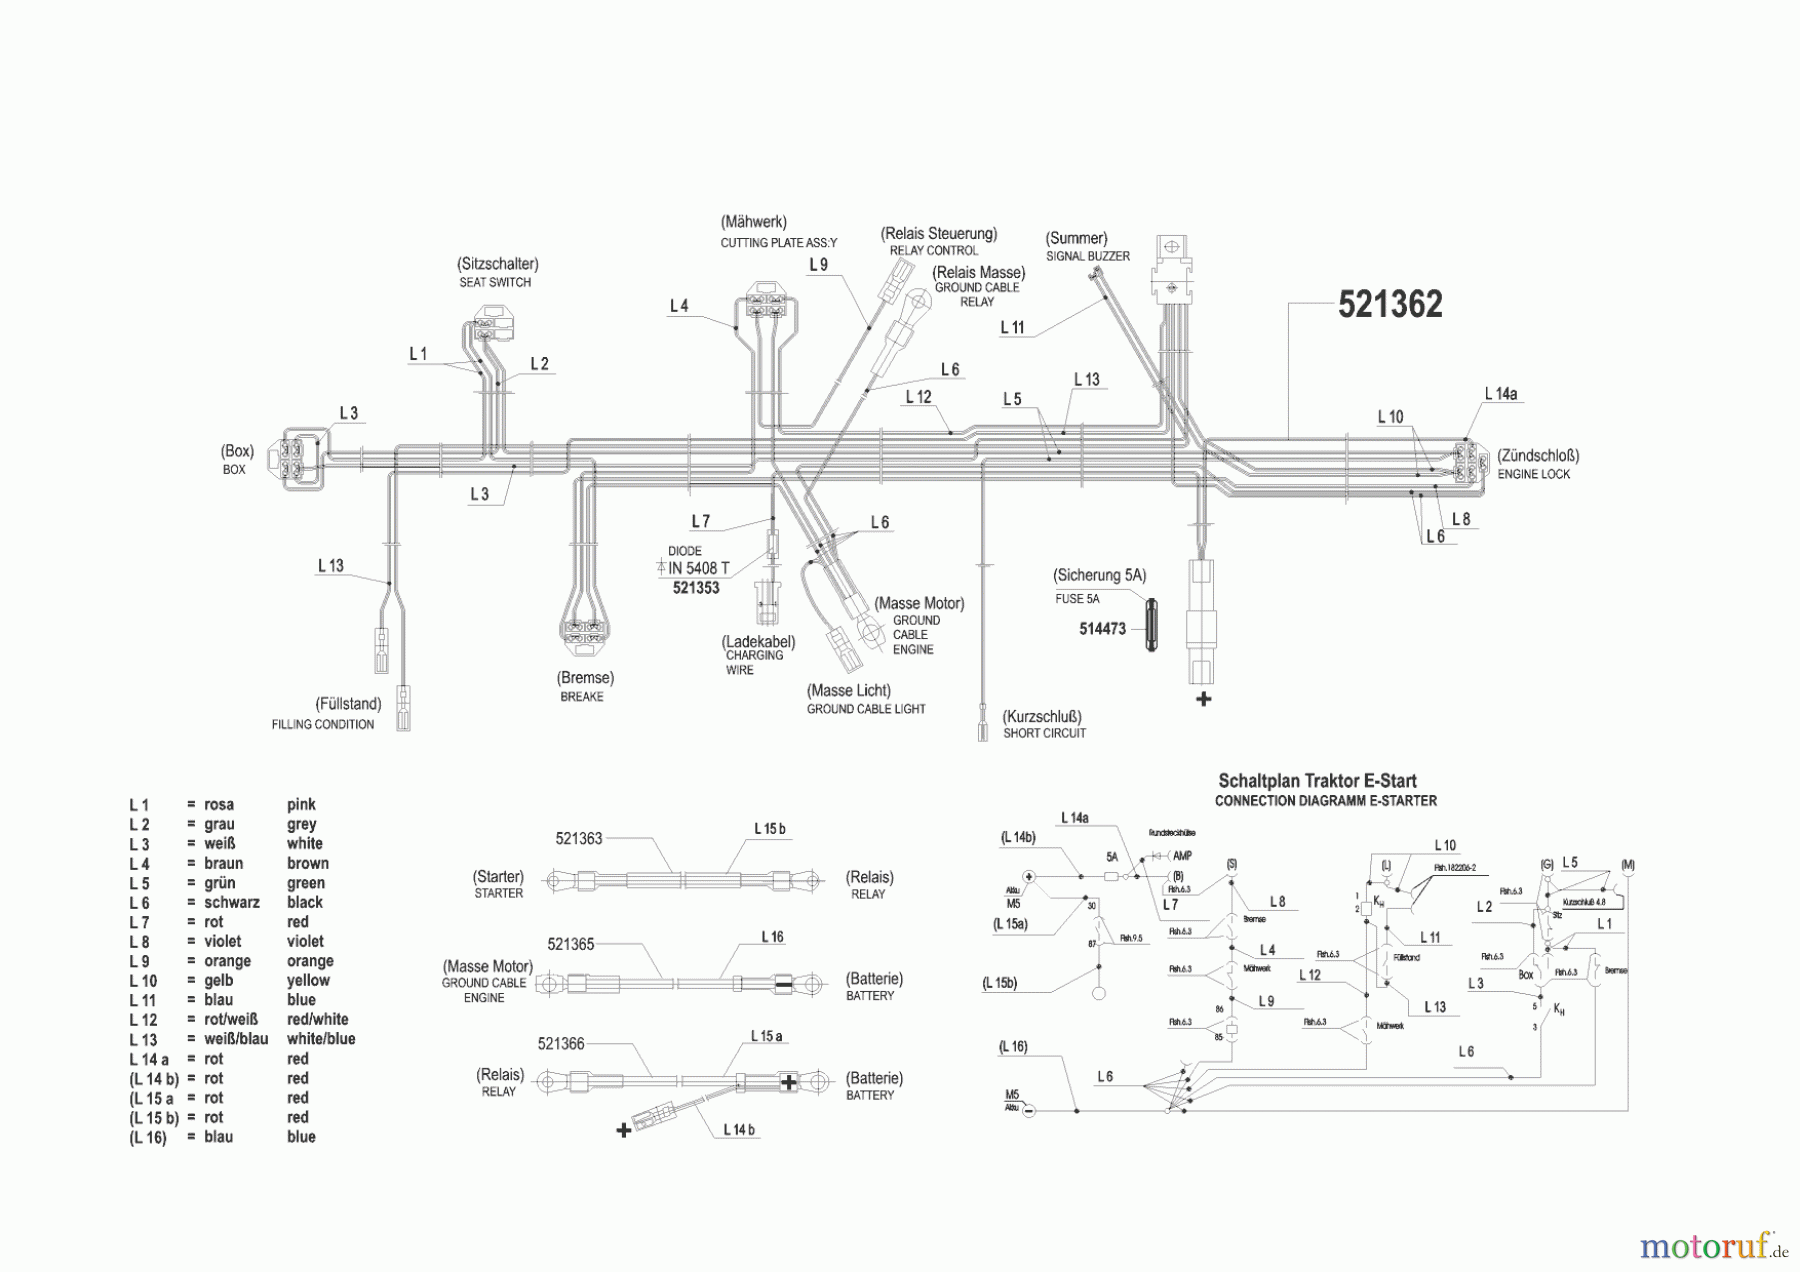  Turbosilent Gartentechnik Rasentraktor 12-75 vor 02/2002 Seite 8